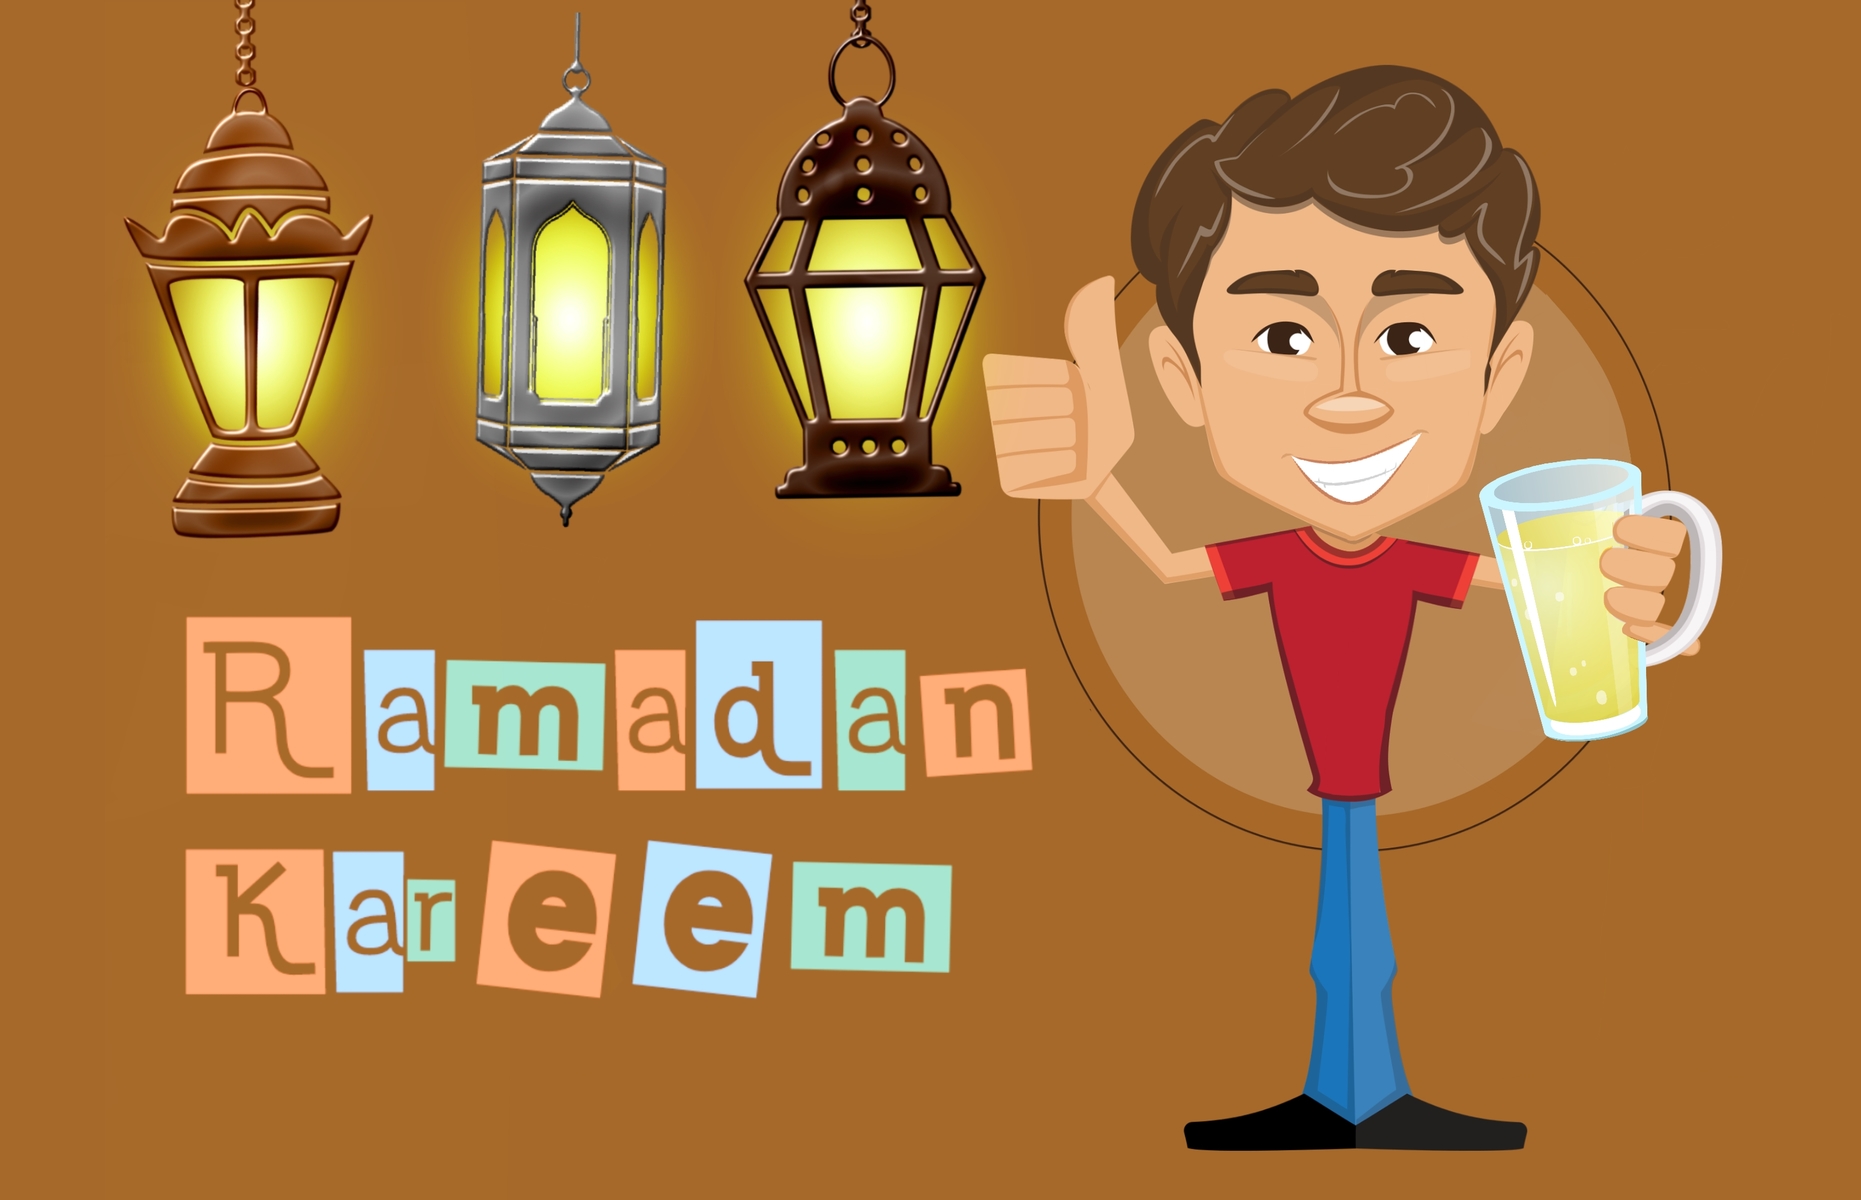 Ramadan Tips